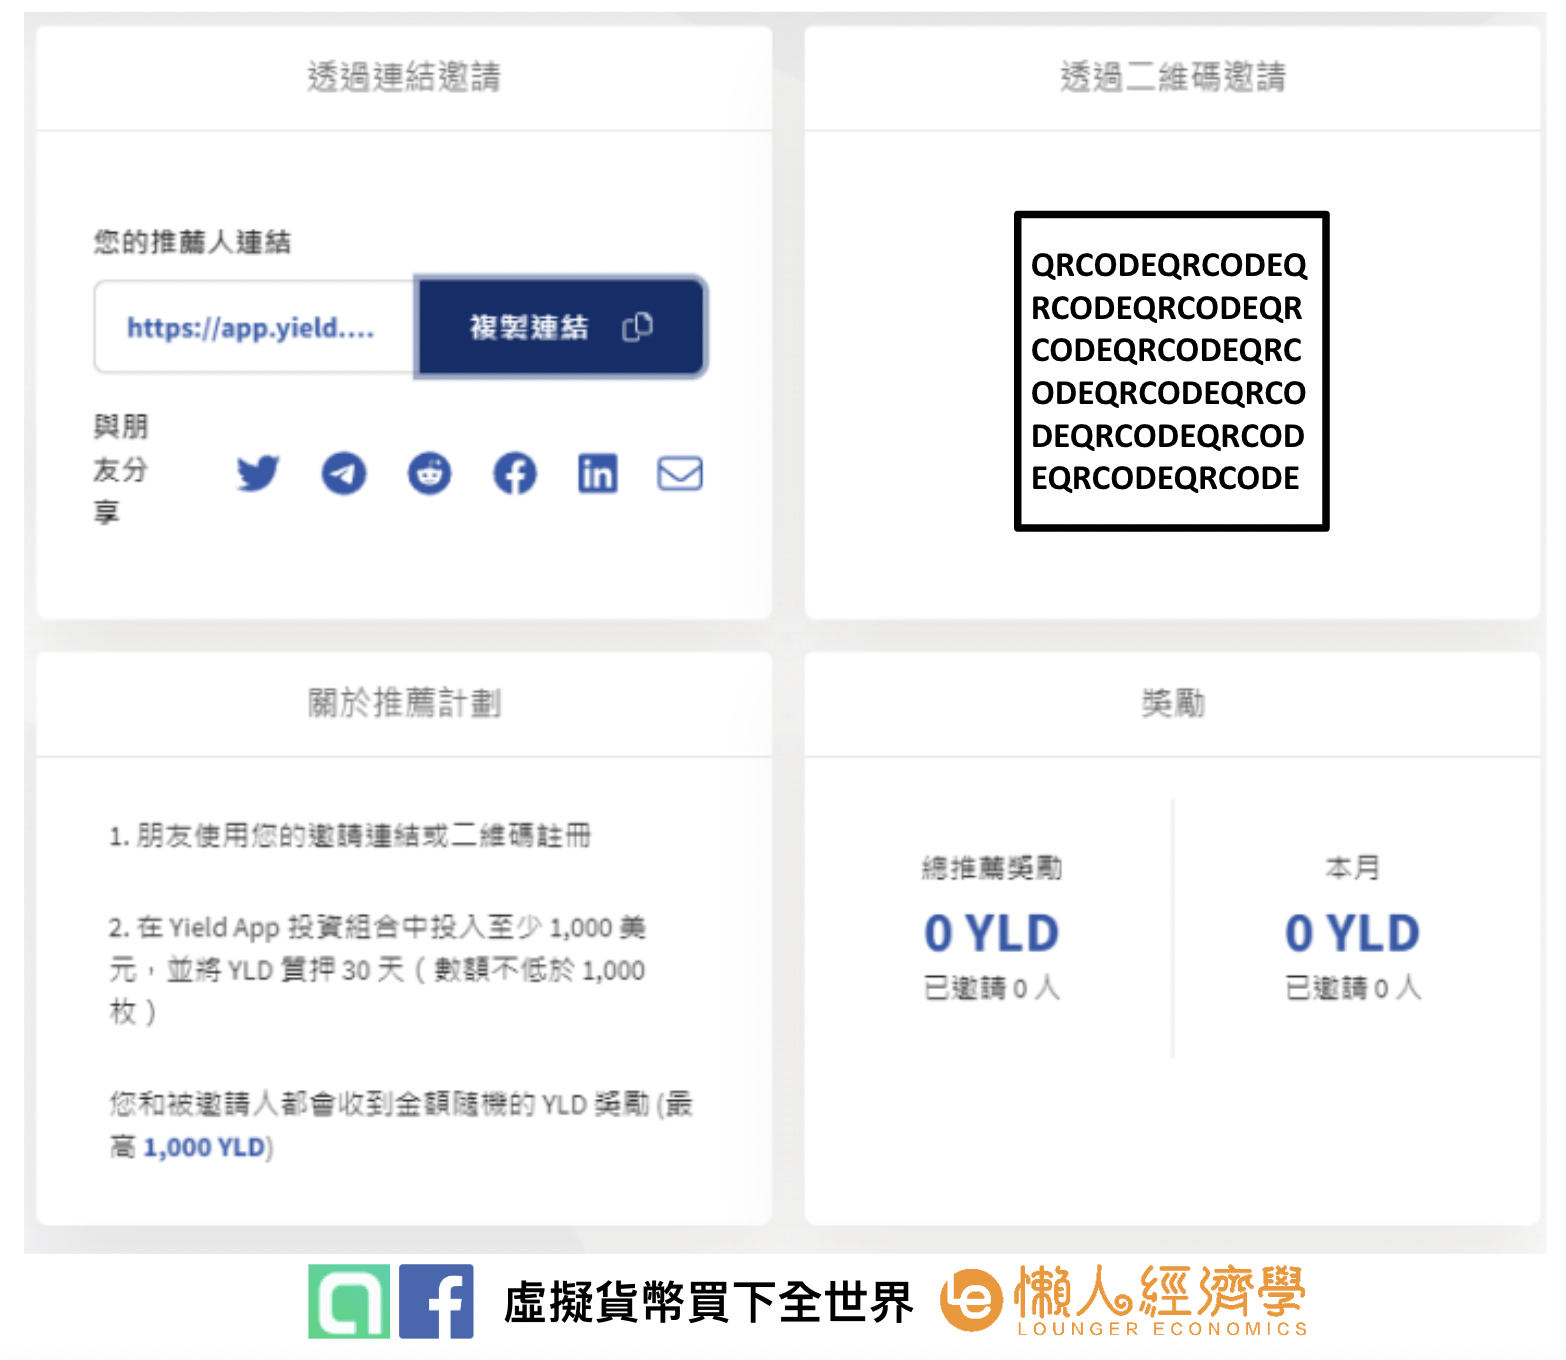 Yield App介紹